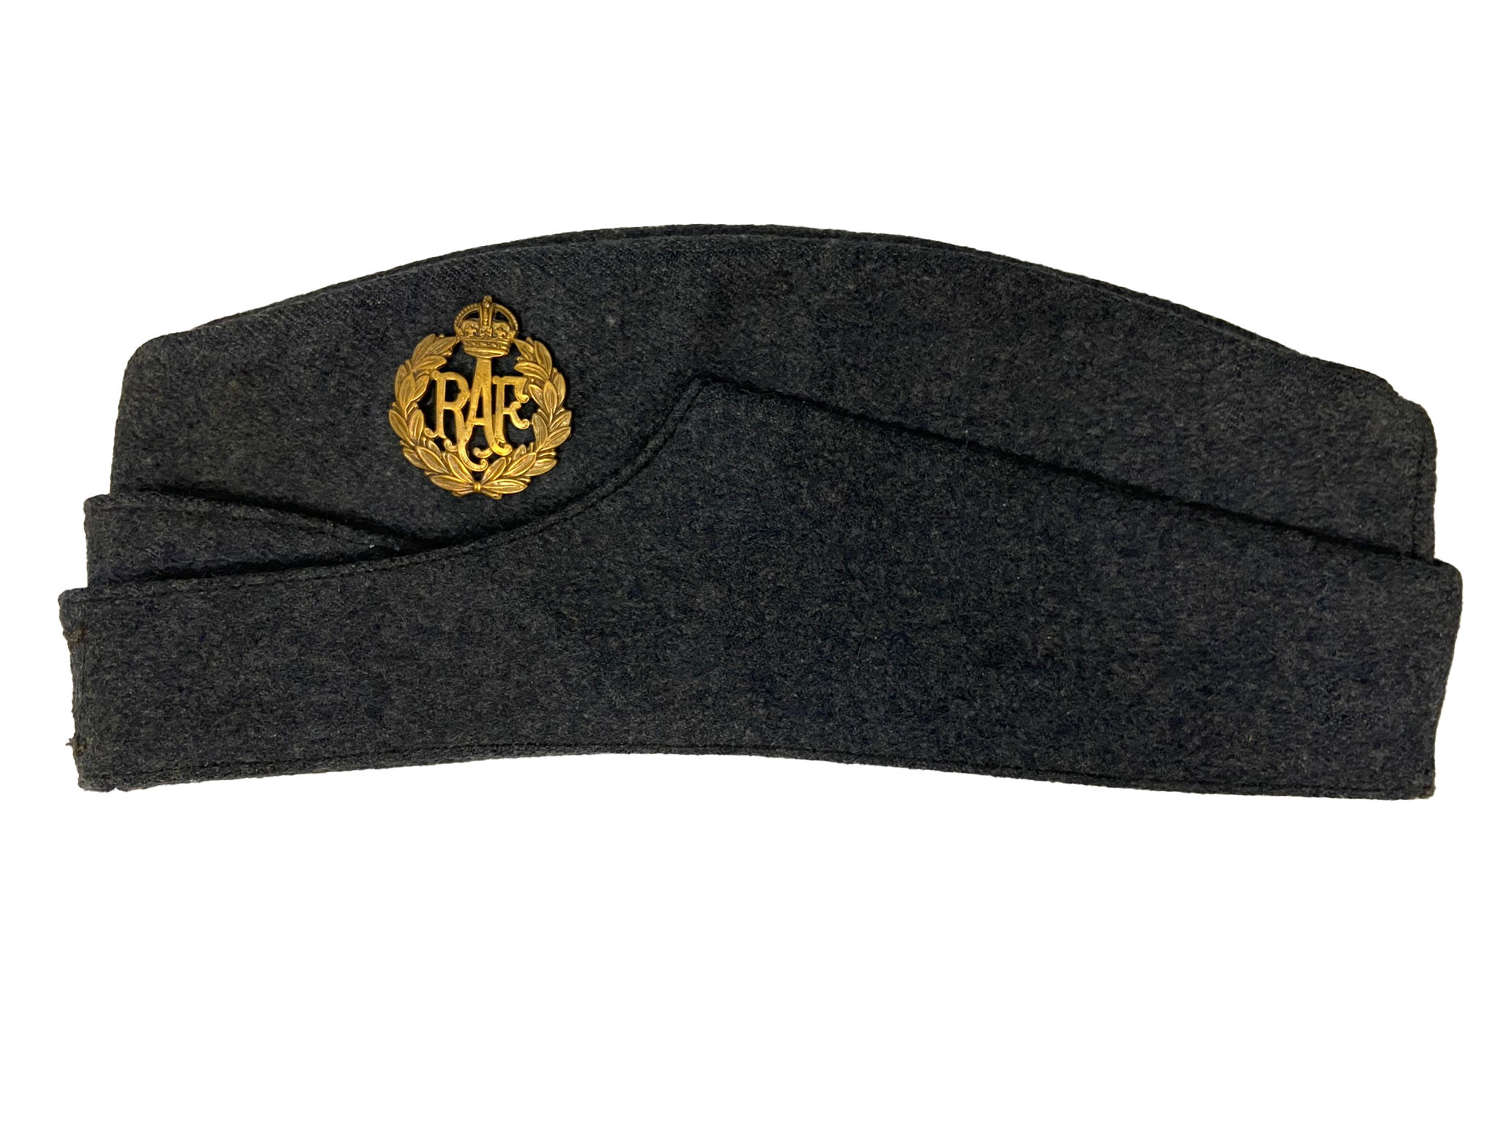 Original 1943 Dated RAF Ordinary Airman's Forage Cap